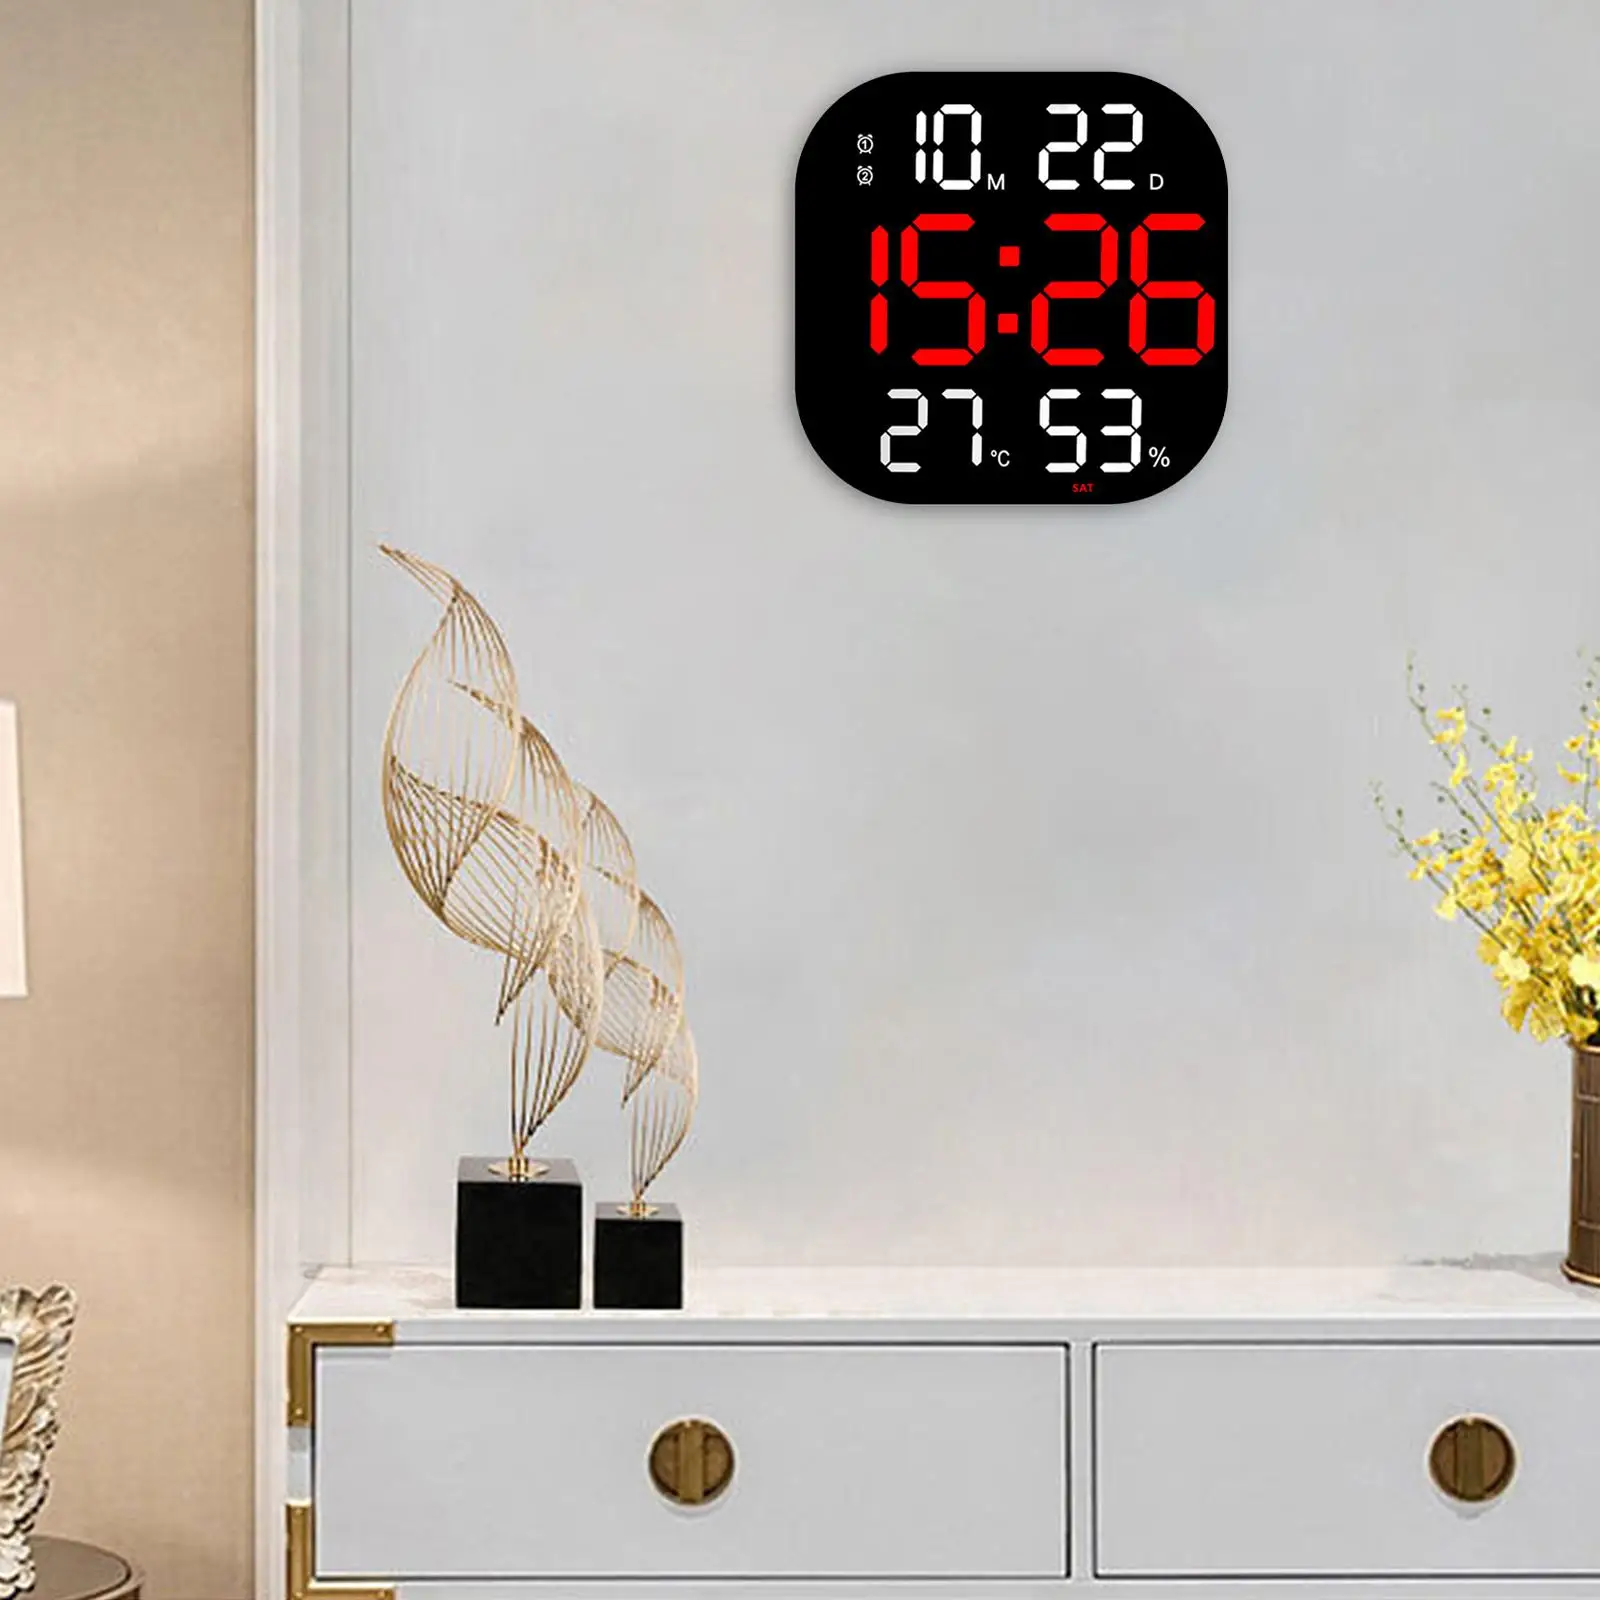 Modern Digital Wall Clock Adjustable Brightness LED Clocks Temperature Month Date Display for Home Decor